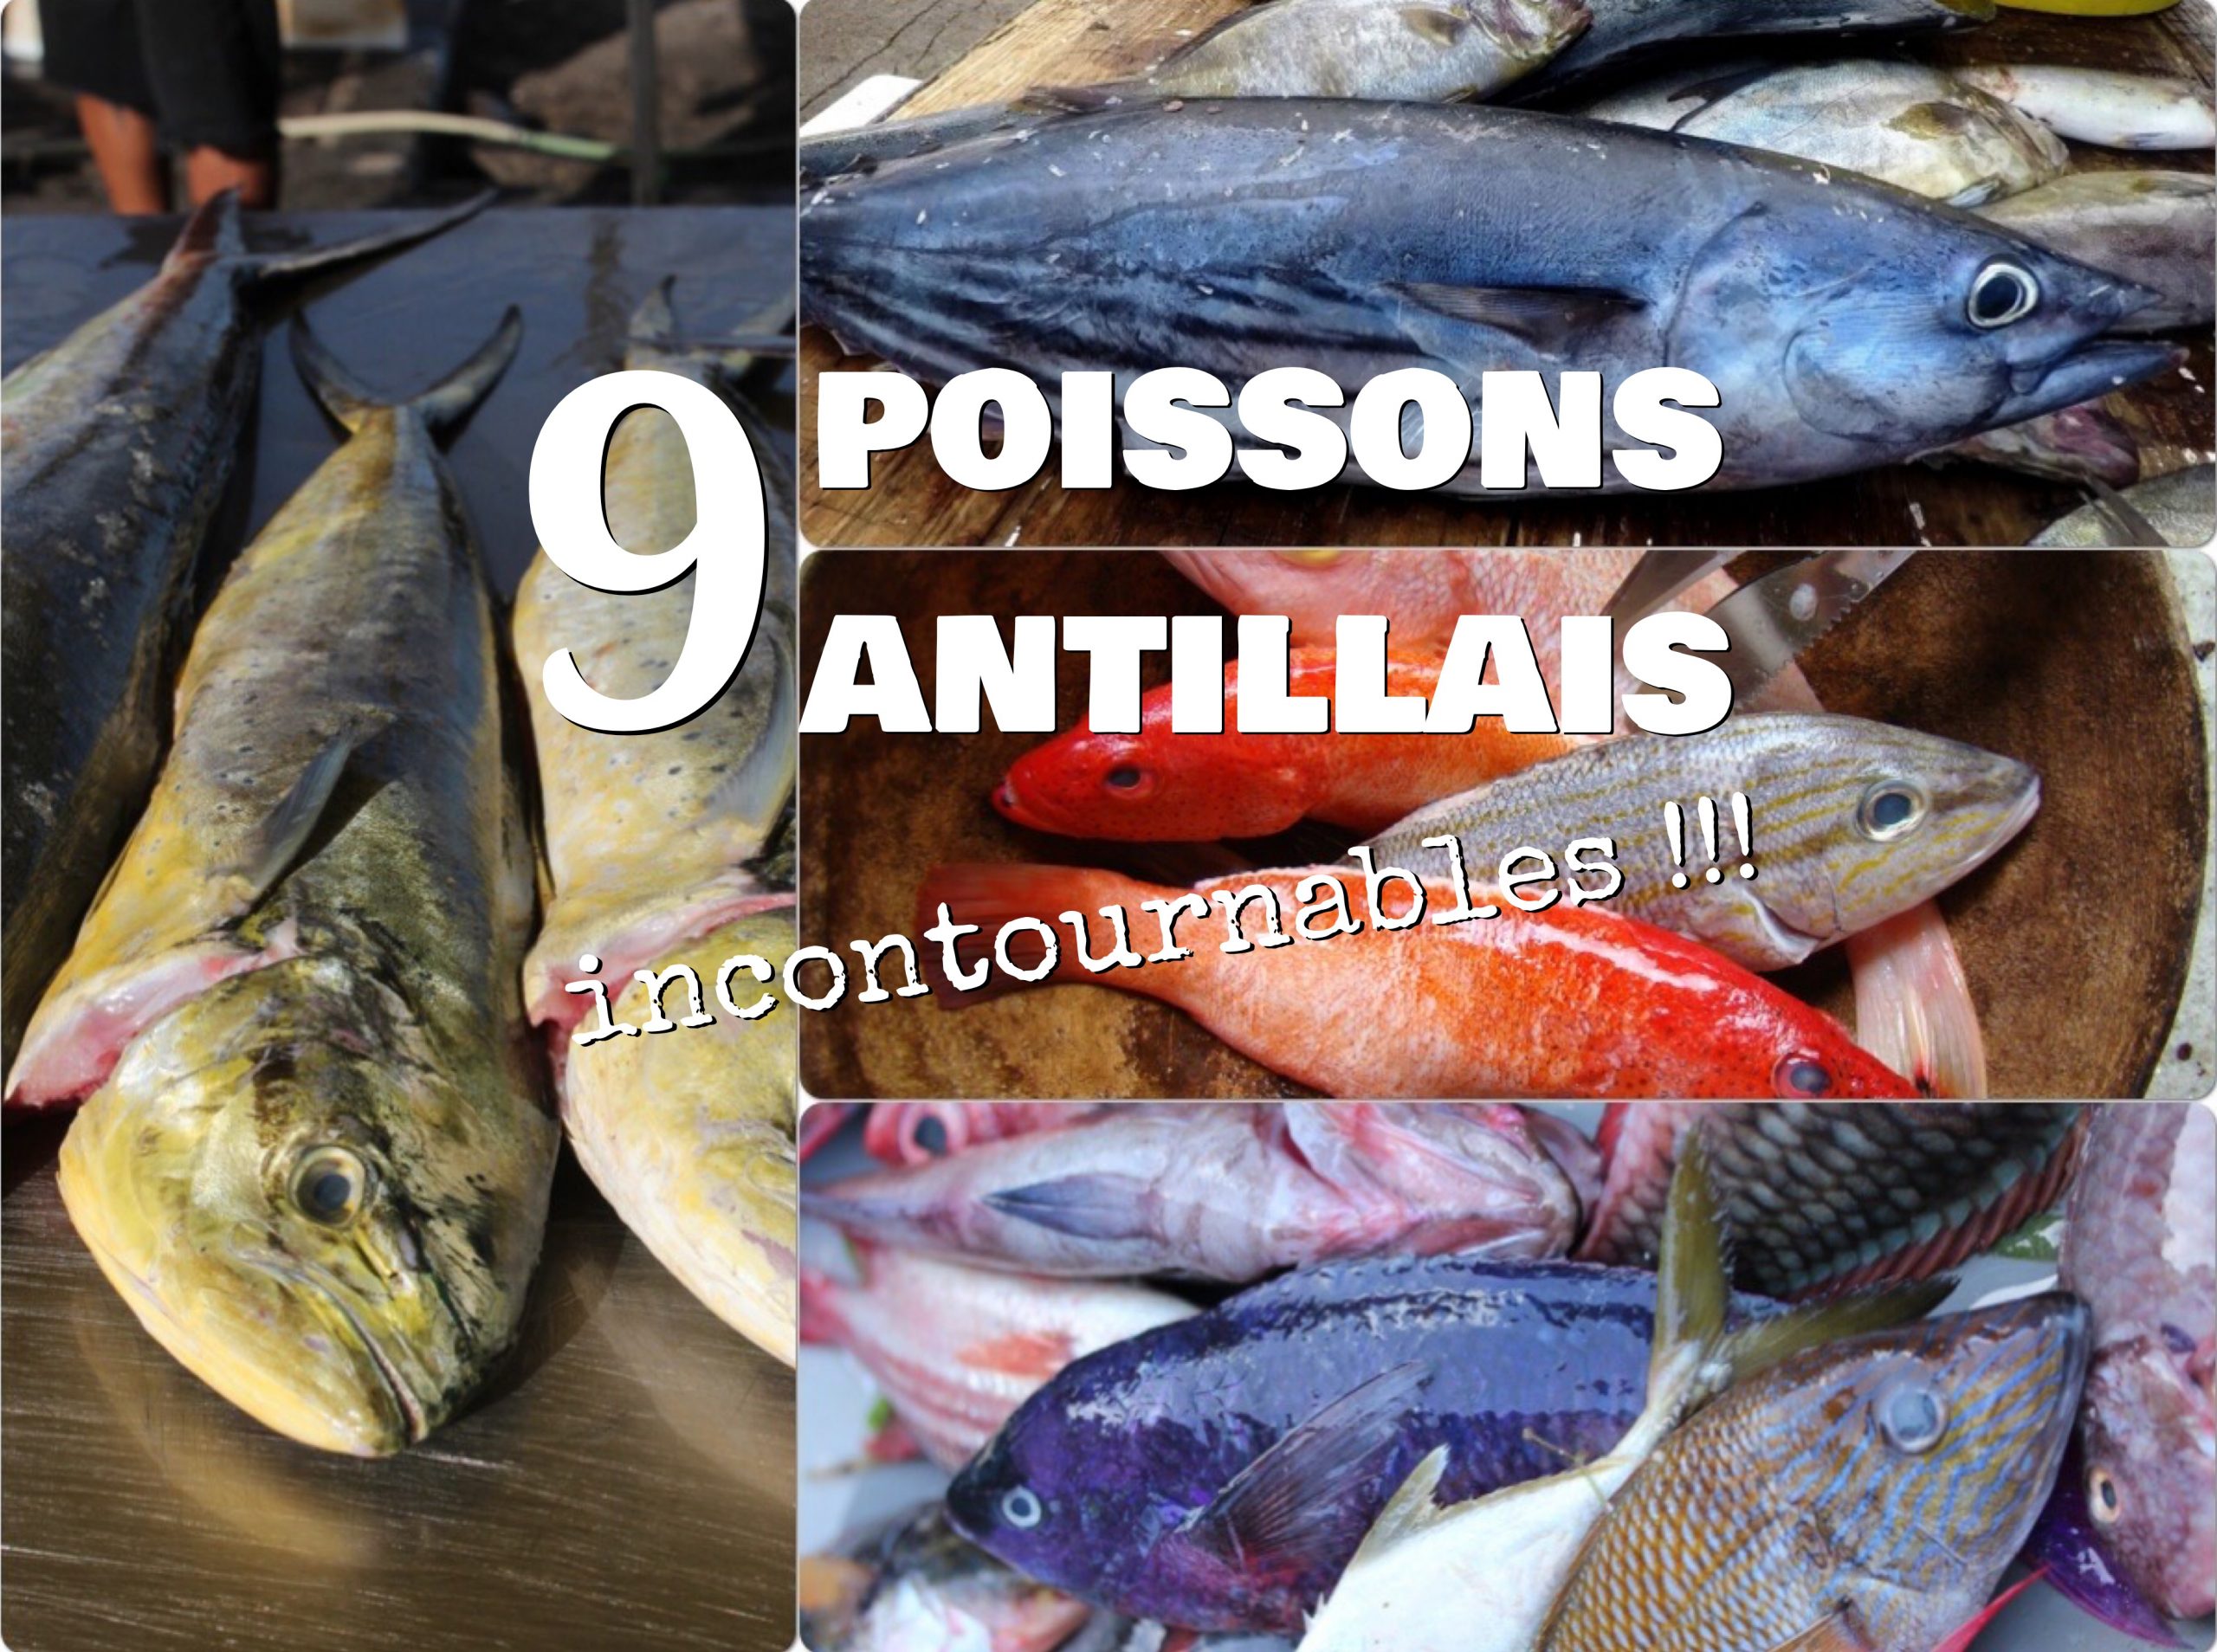 https://www.tatiemaryse.com/wp-content/uploads/2021/02/9-poissons-antillais-incontournables-scaled.jpg